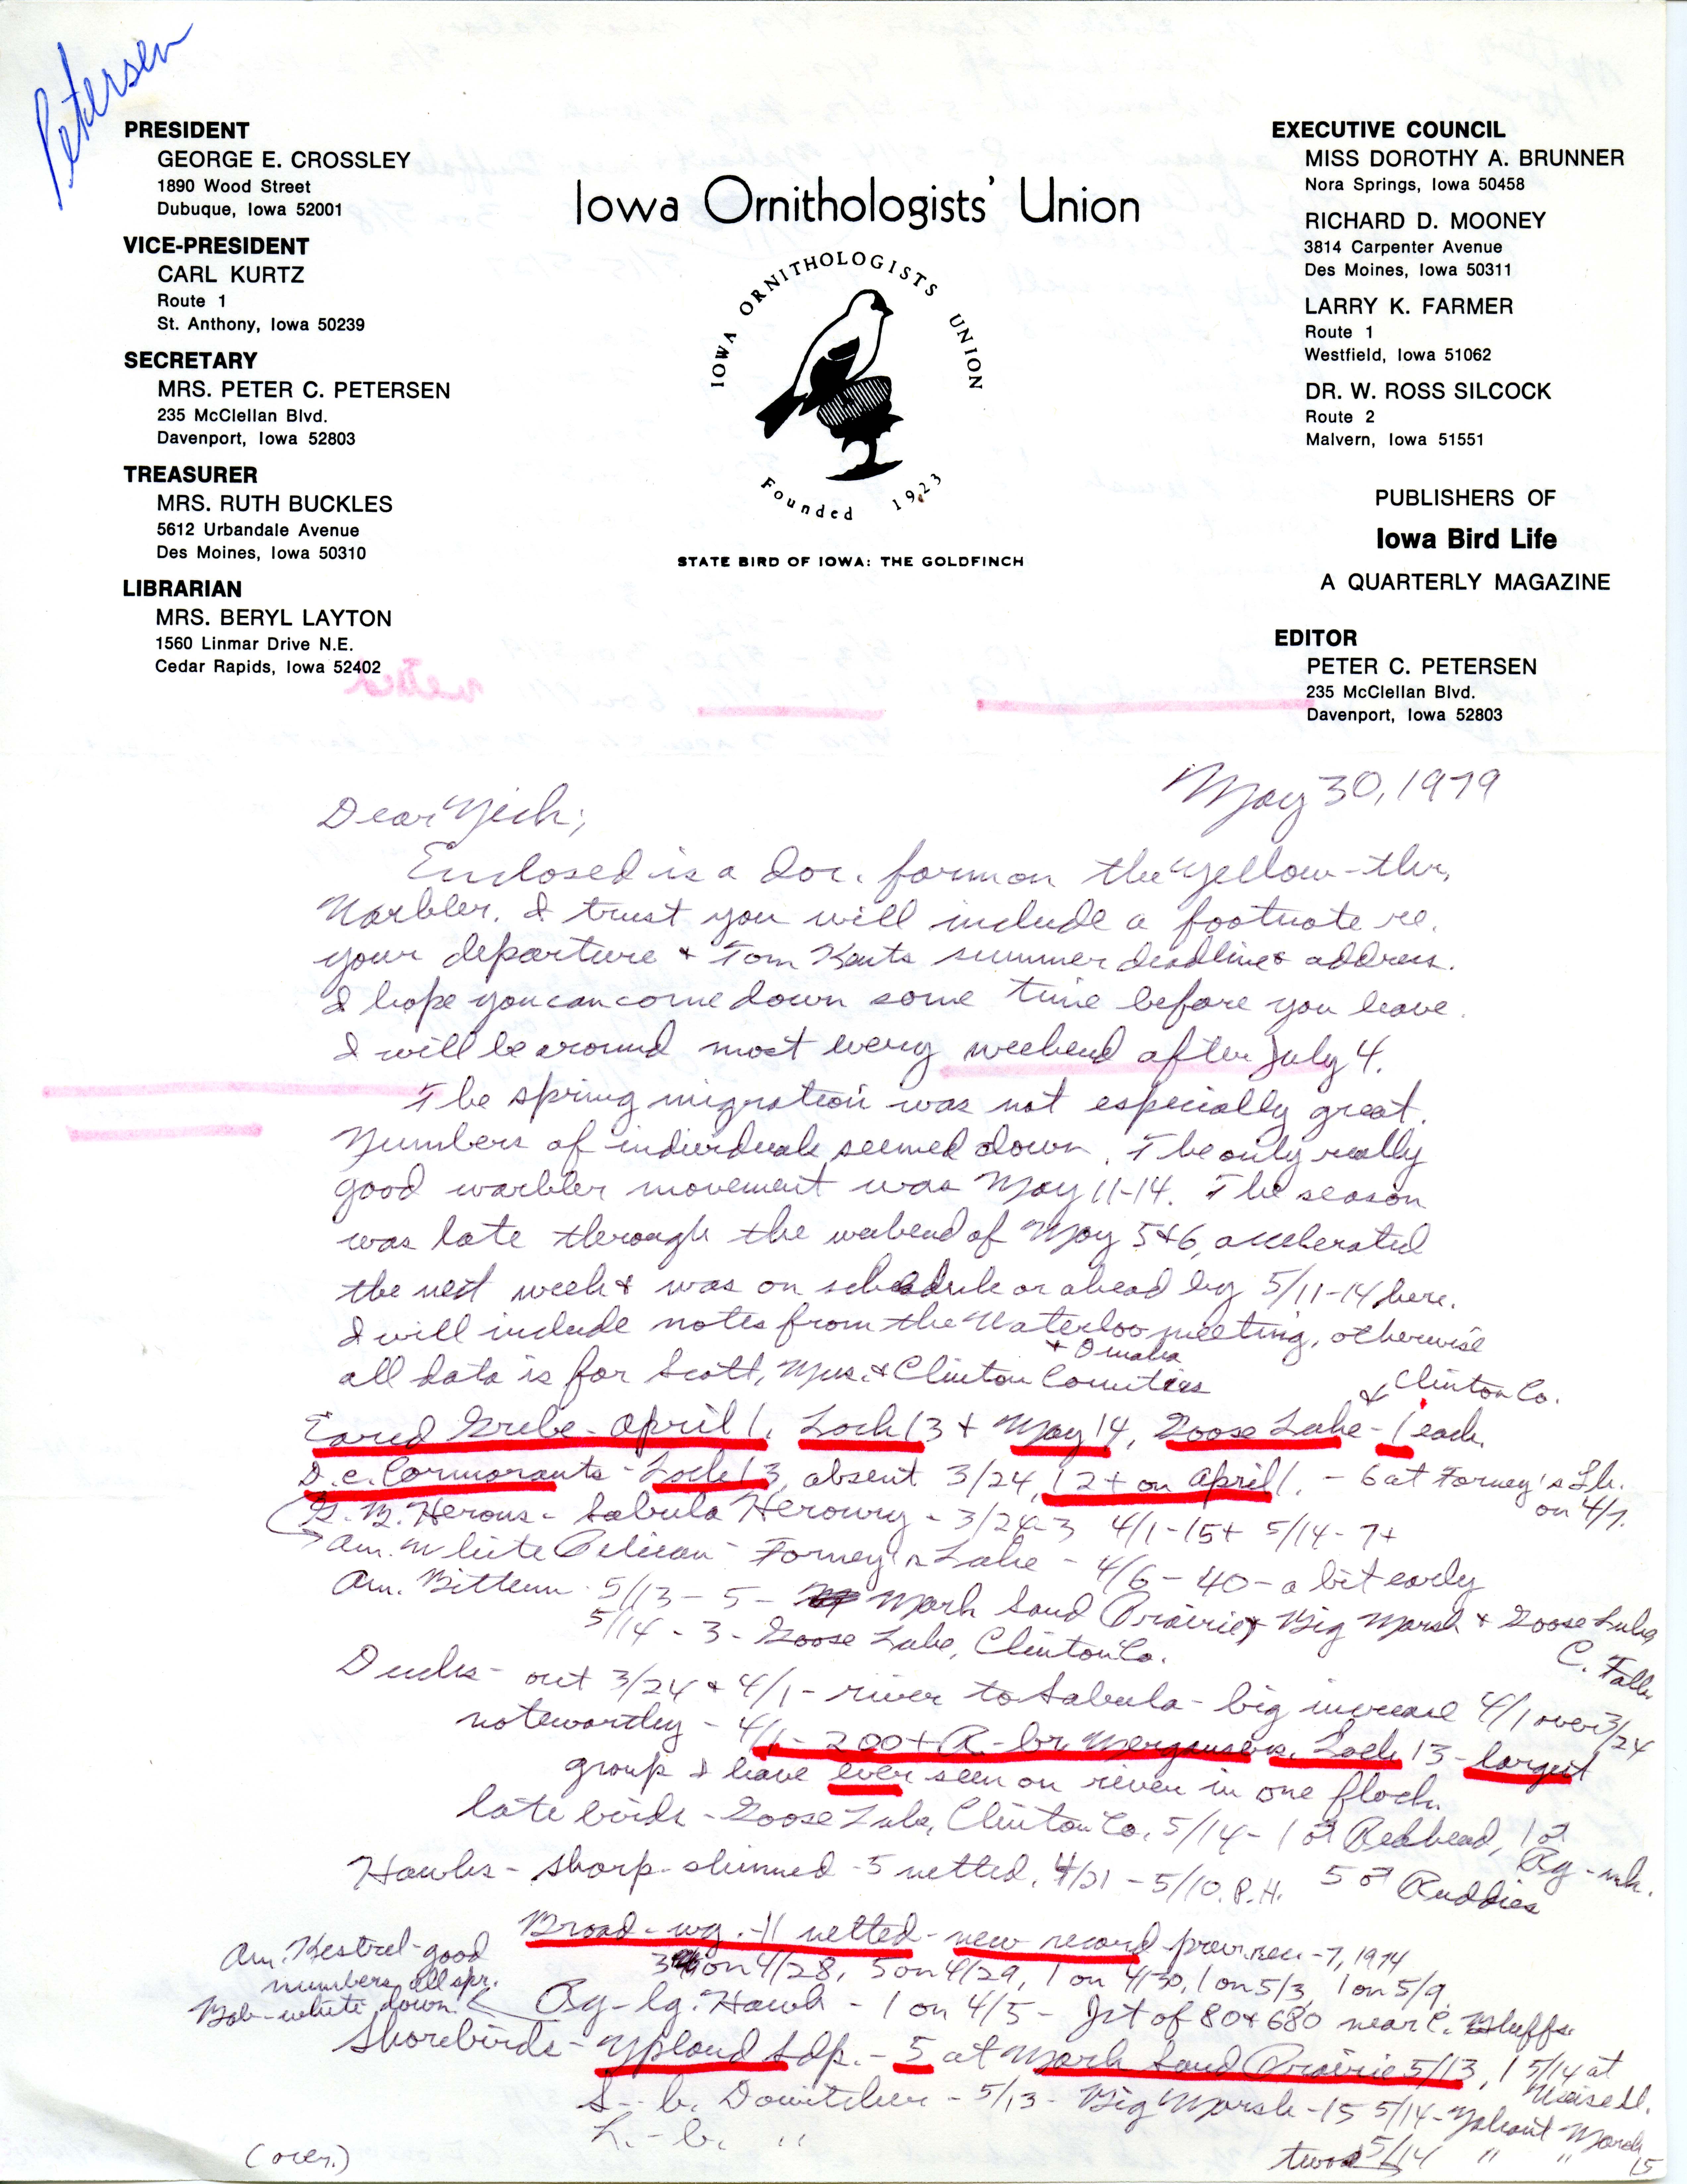 Peter C. Petersen letter to Nicholas S. Halmi regarding spring bird sightings, May 30, 1979